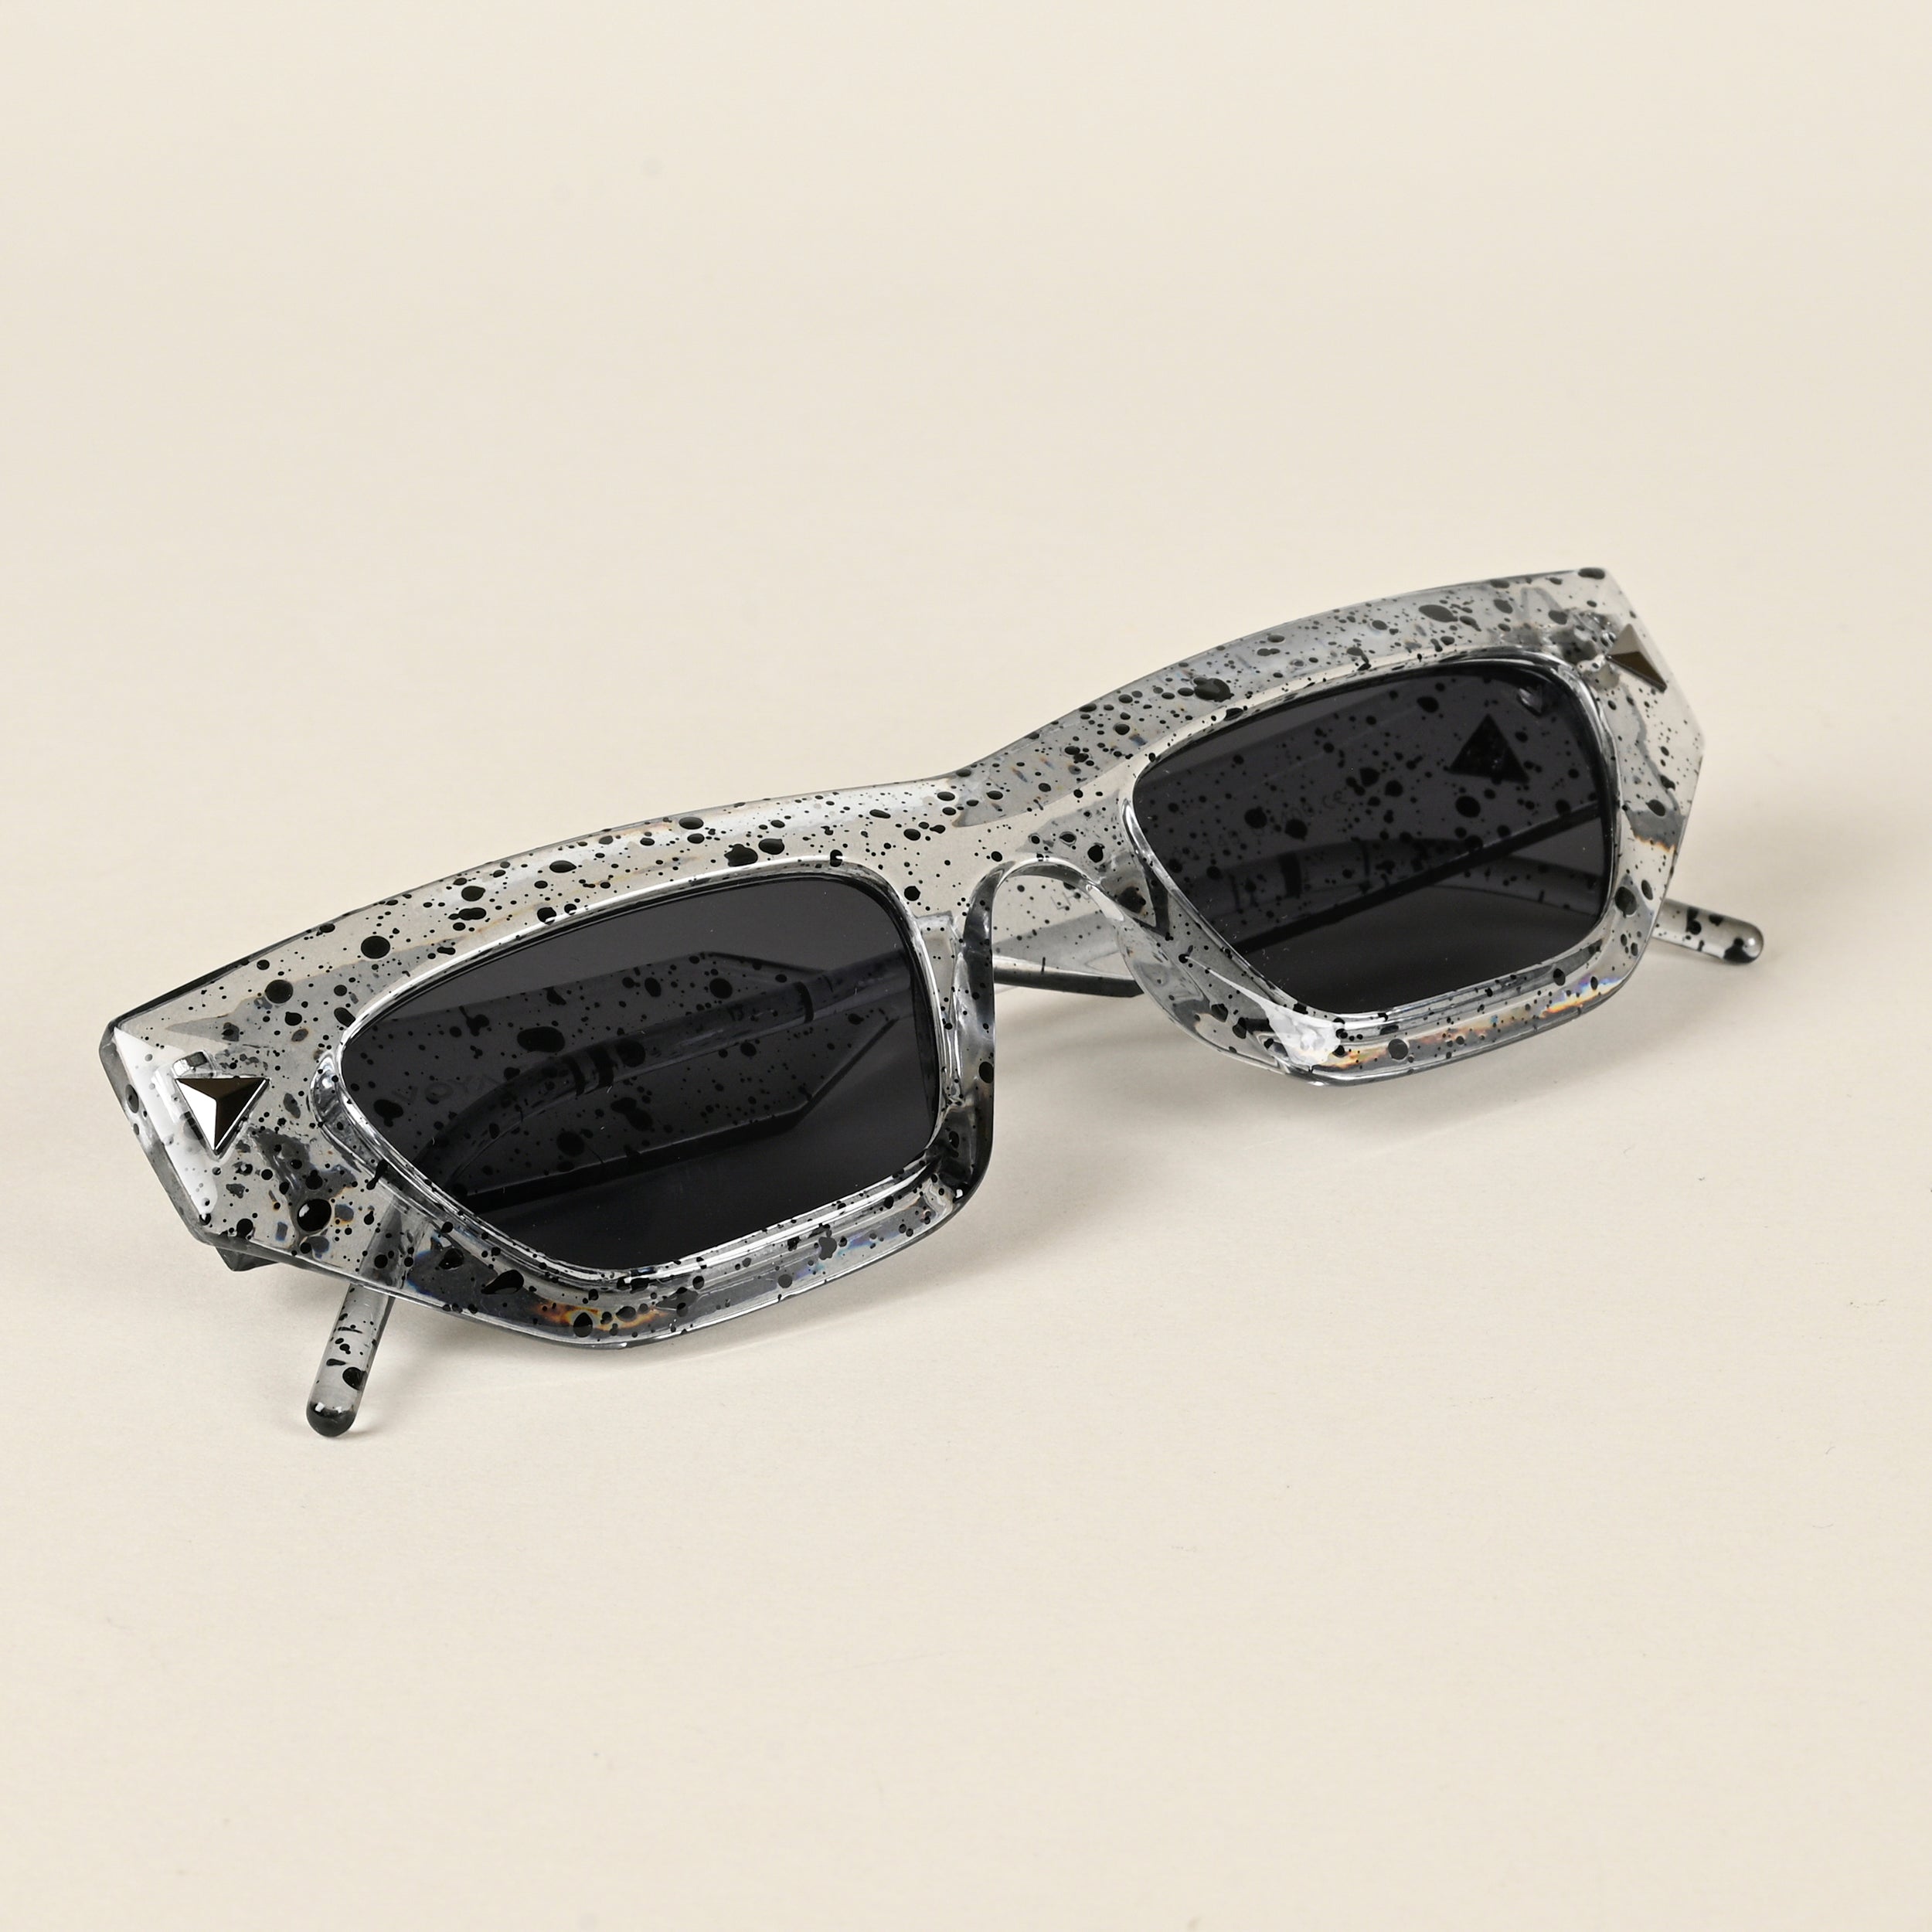 Voyage Grey Cateye Sunglasses for Women - MG4506